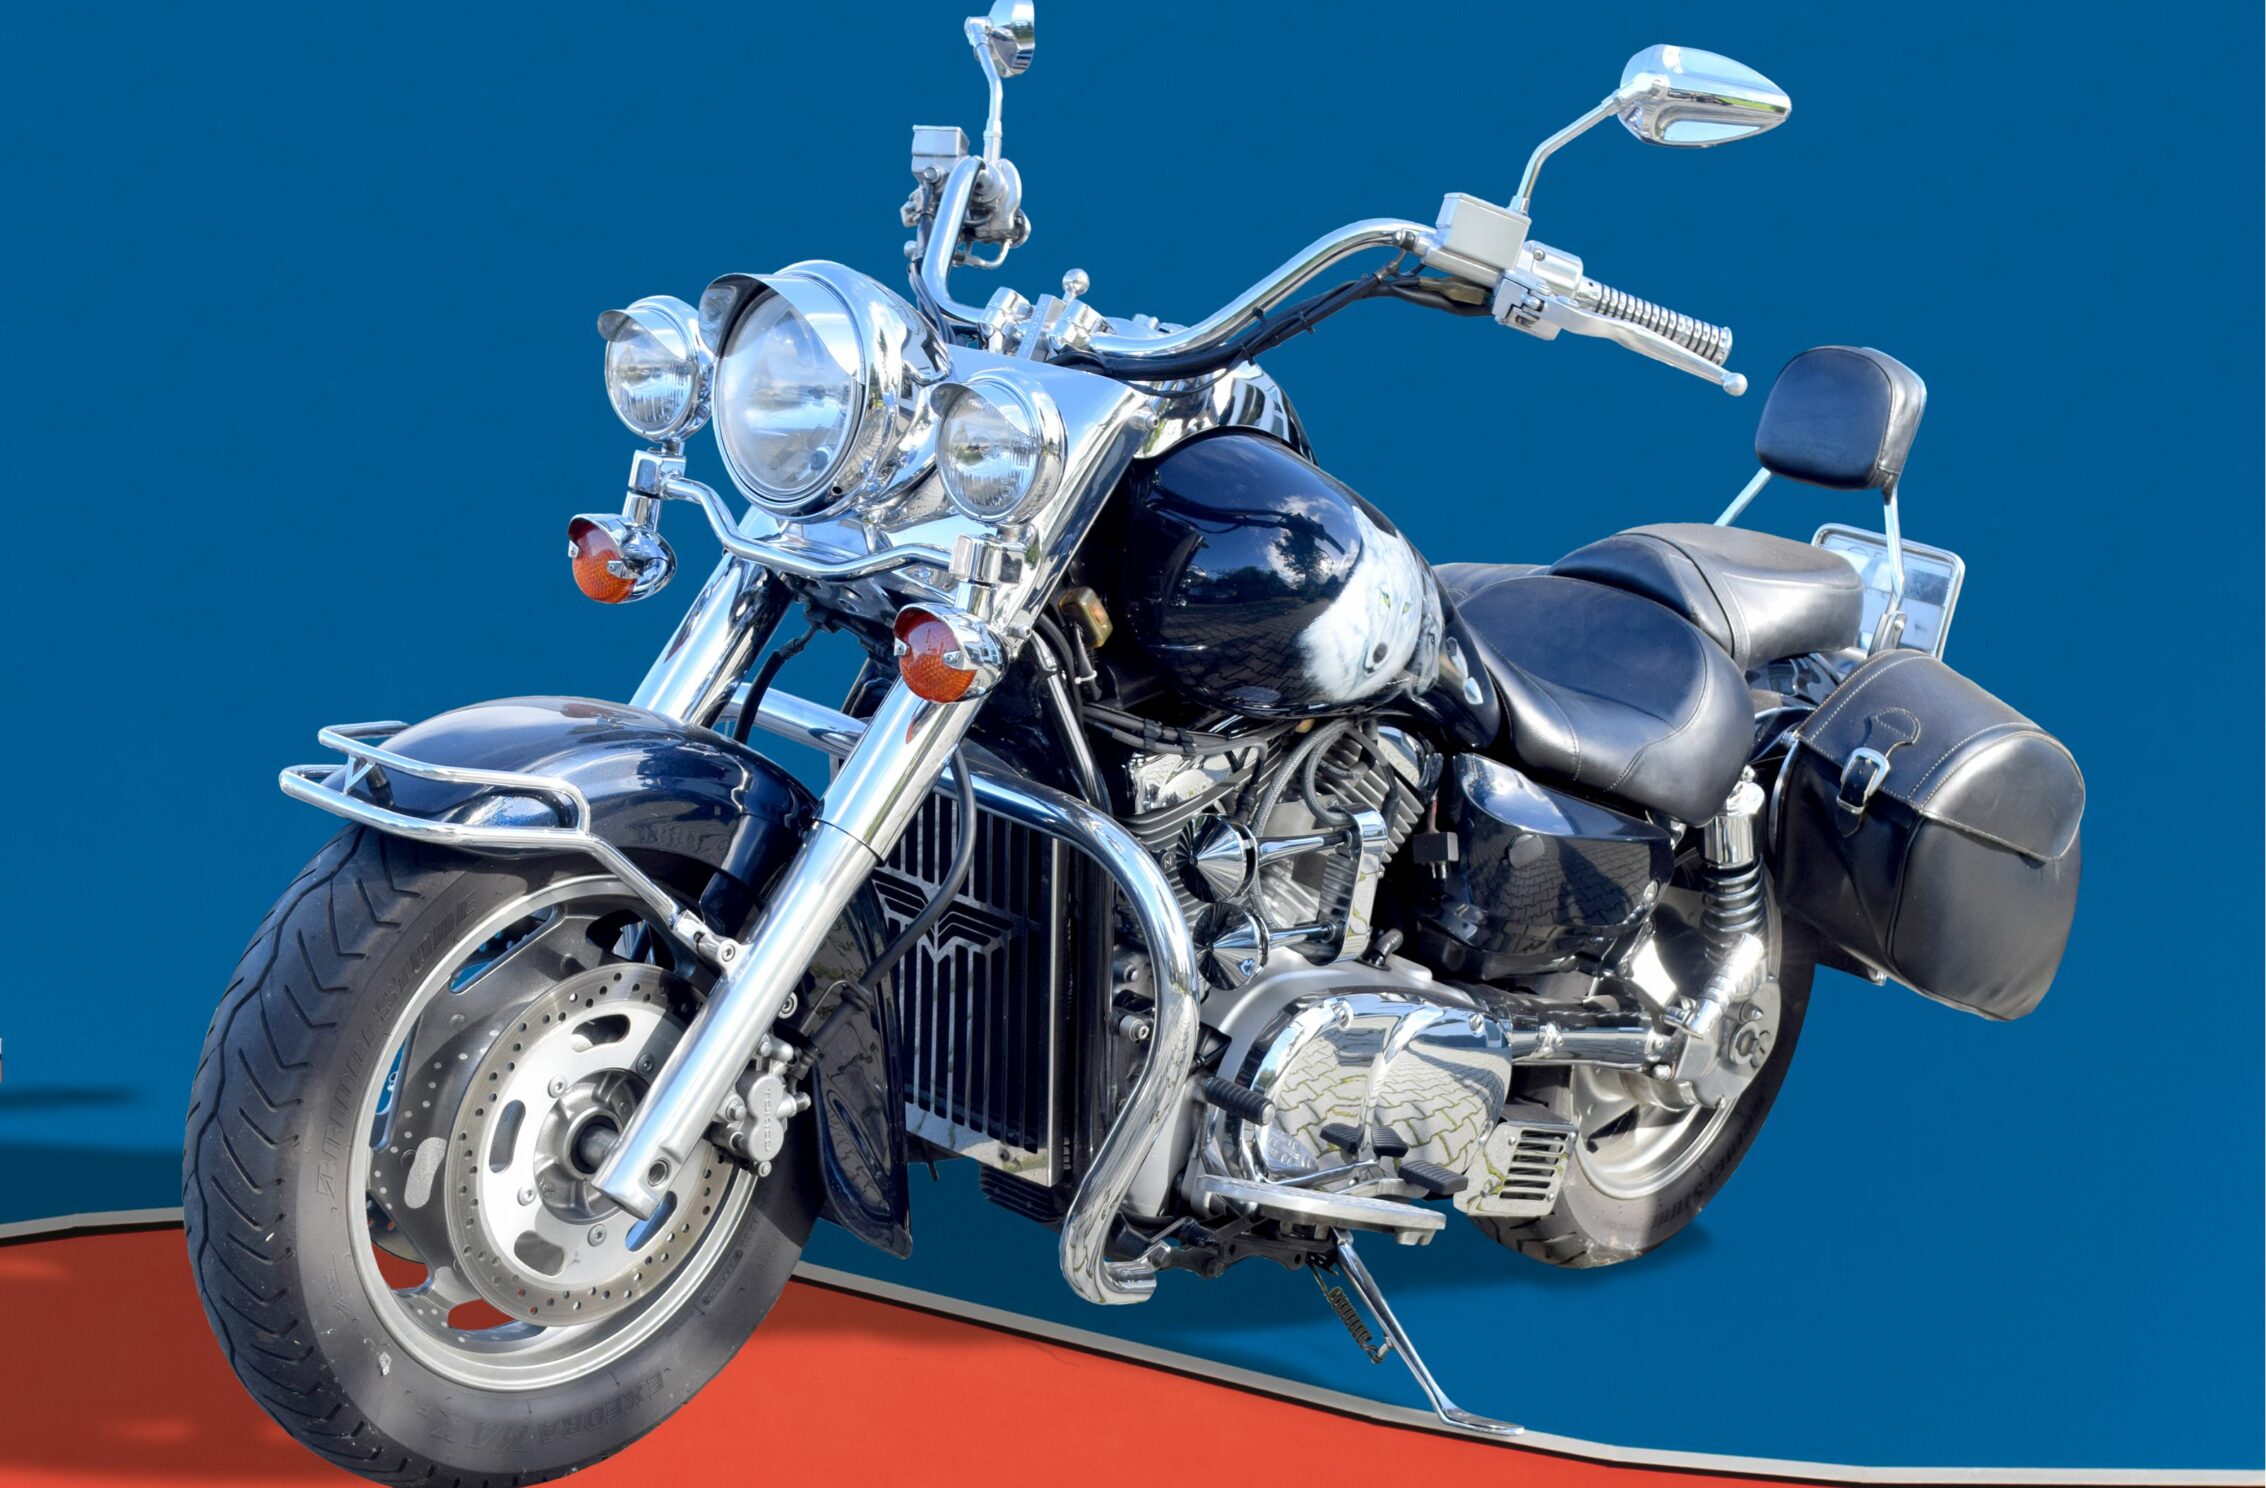 2266x1488 wallpaper Motorbike Blue Dividing Red Ipad Wallpaper 2266x1488 pixels resolution